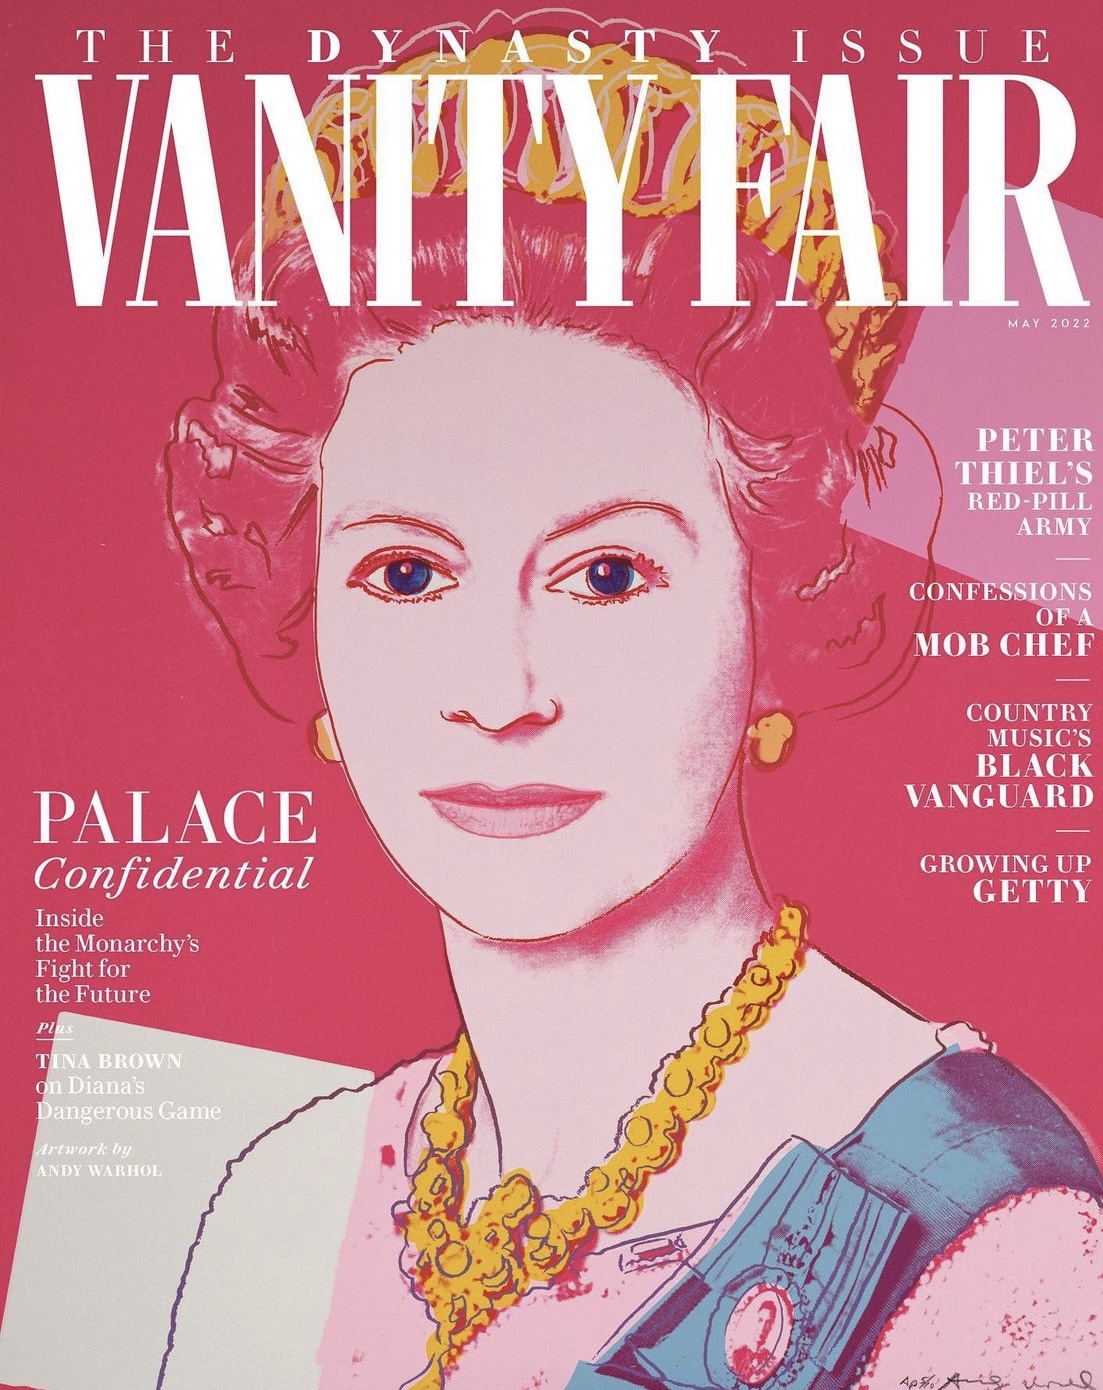 VANITY FAIR FRANCE - Magazines - Express Mag